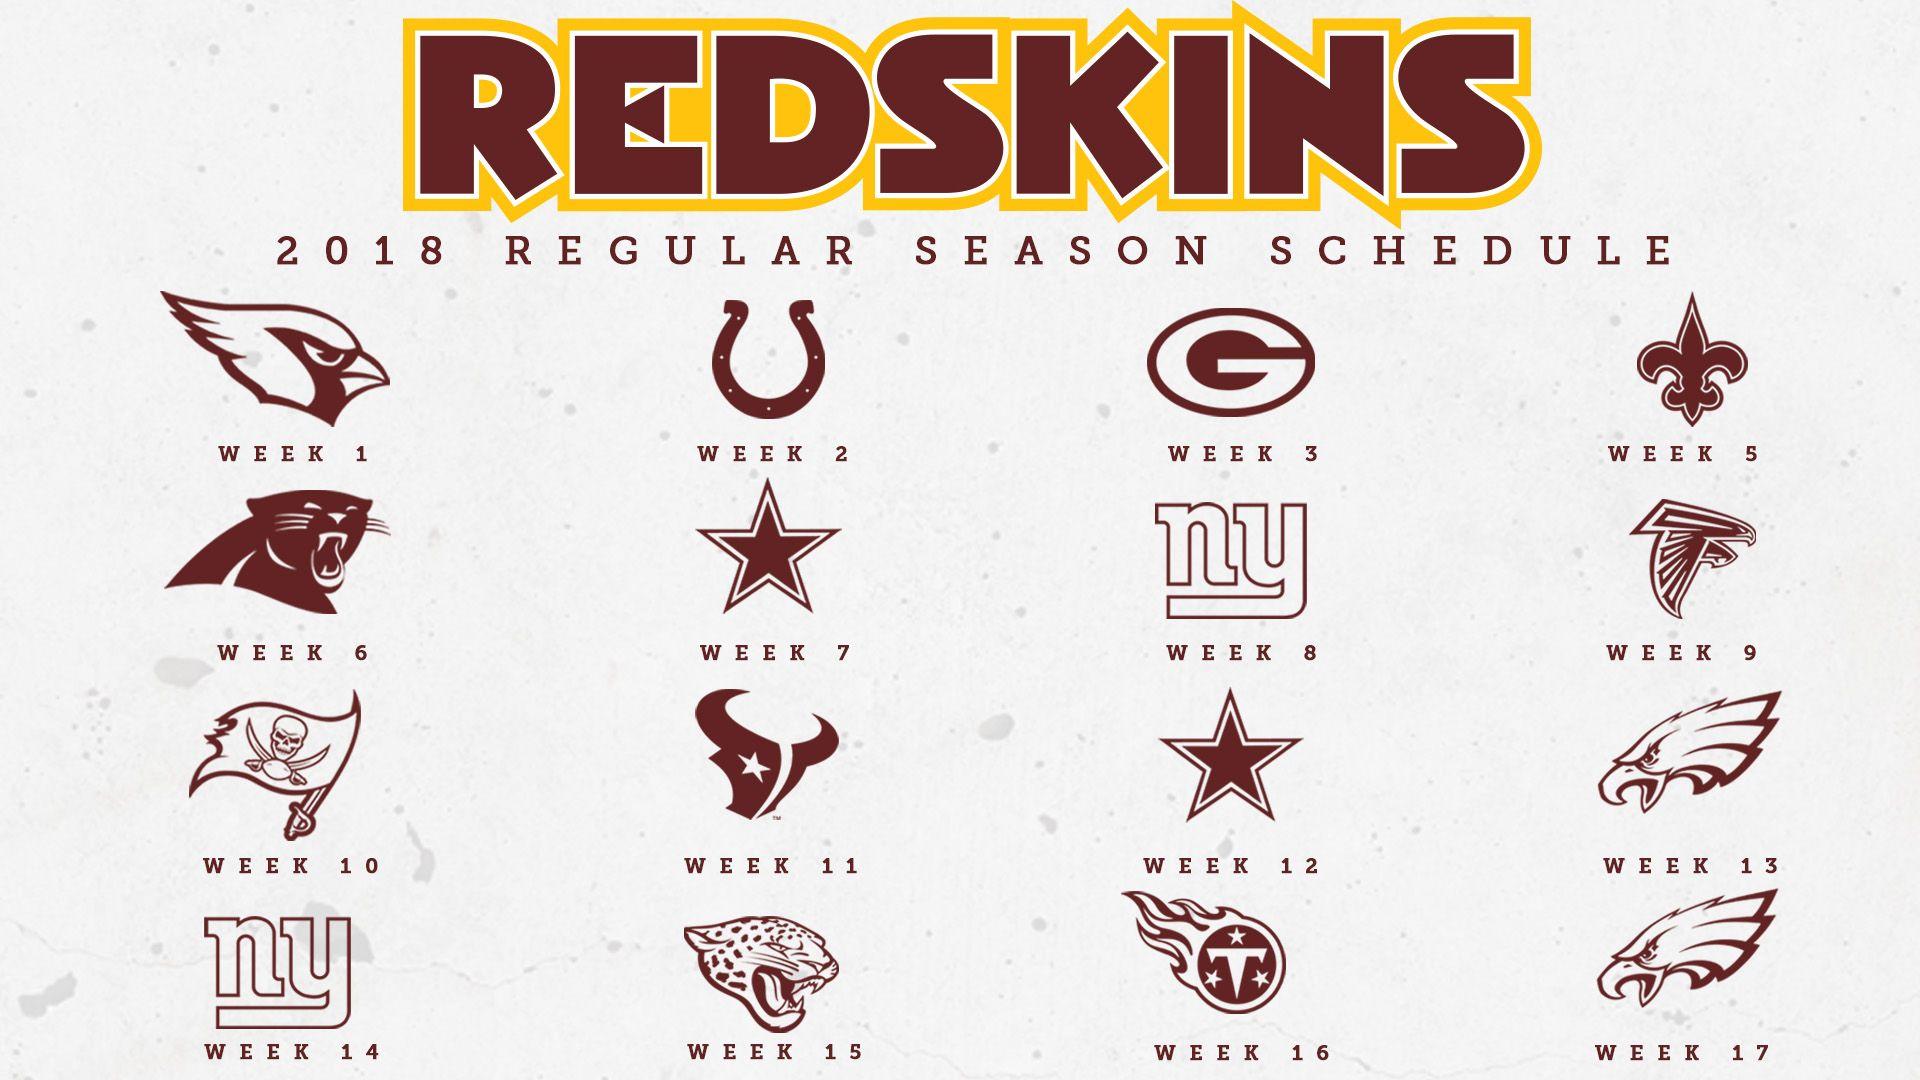 Redskins Release Official 2018 Regular Season Schedule. NBC Sports